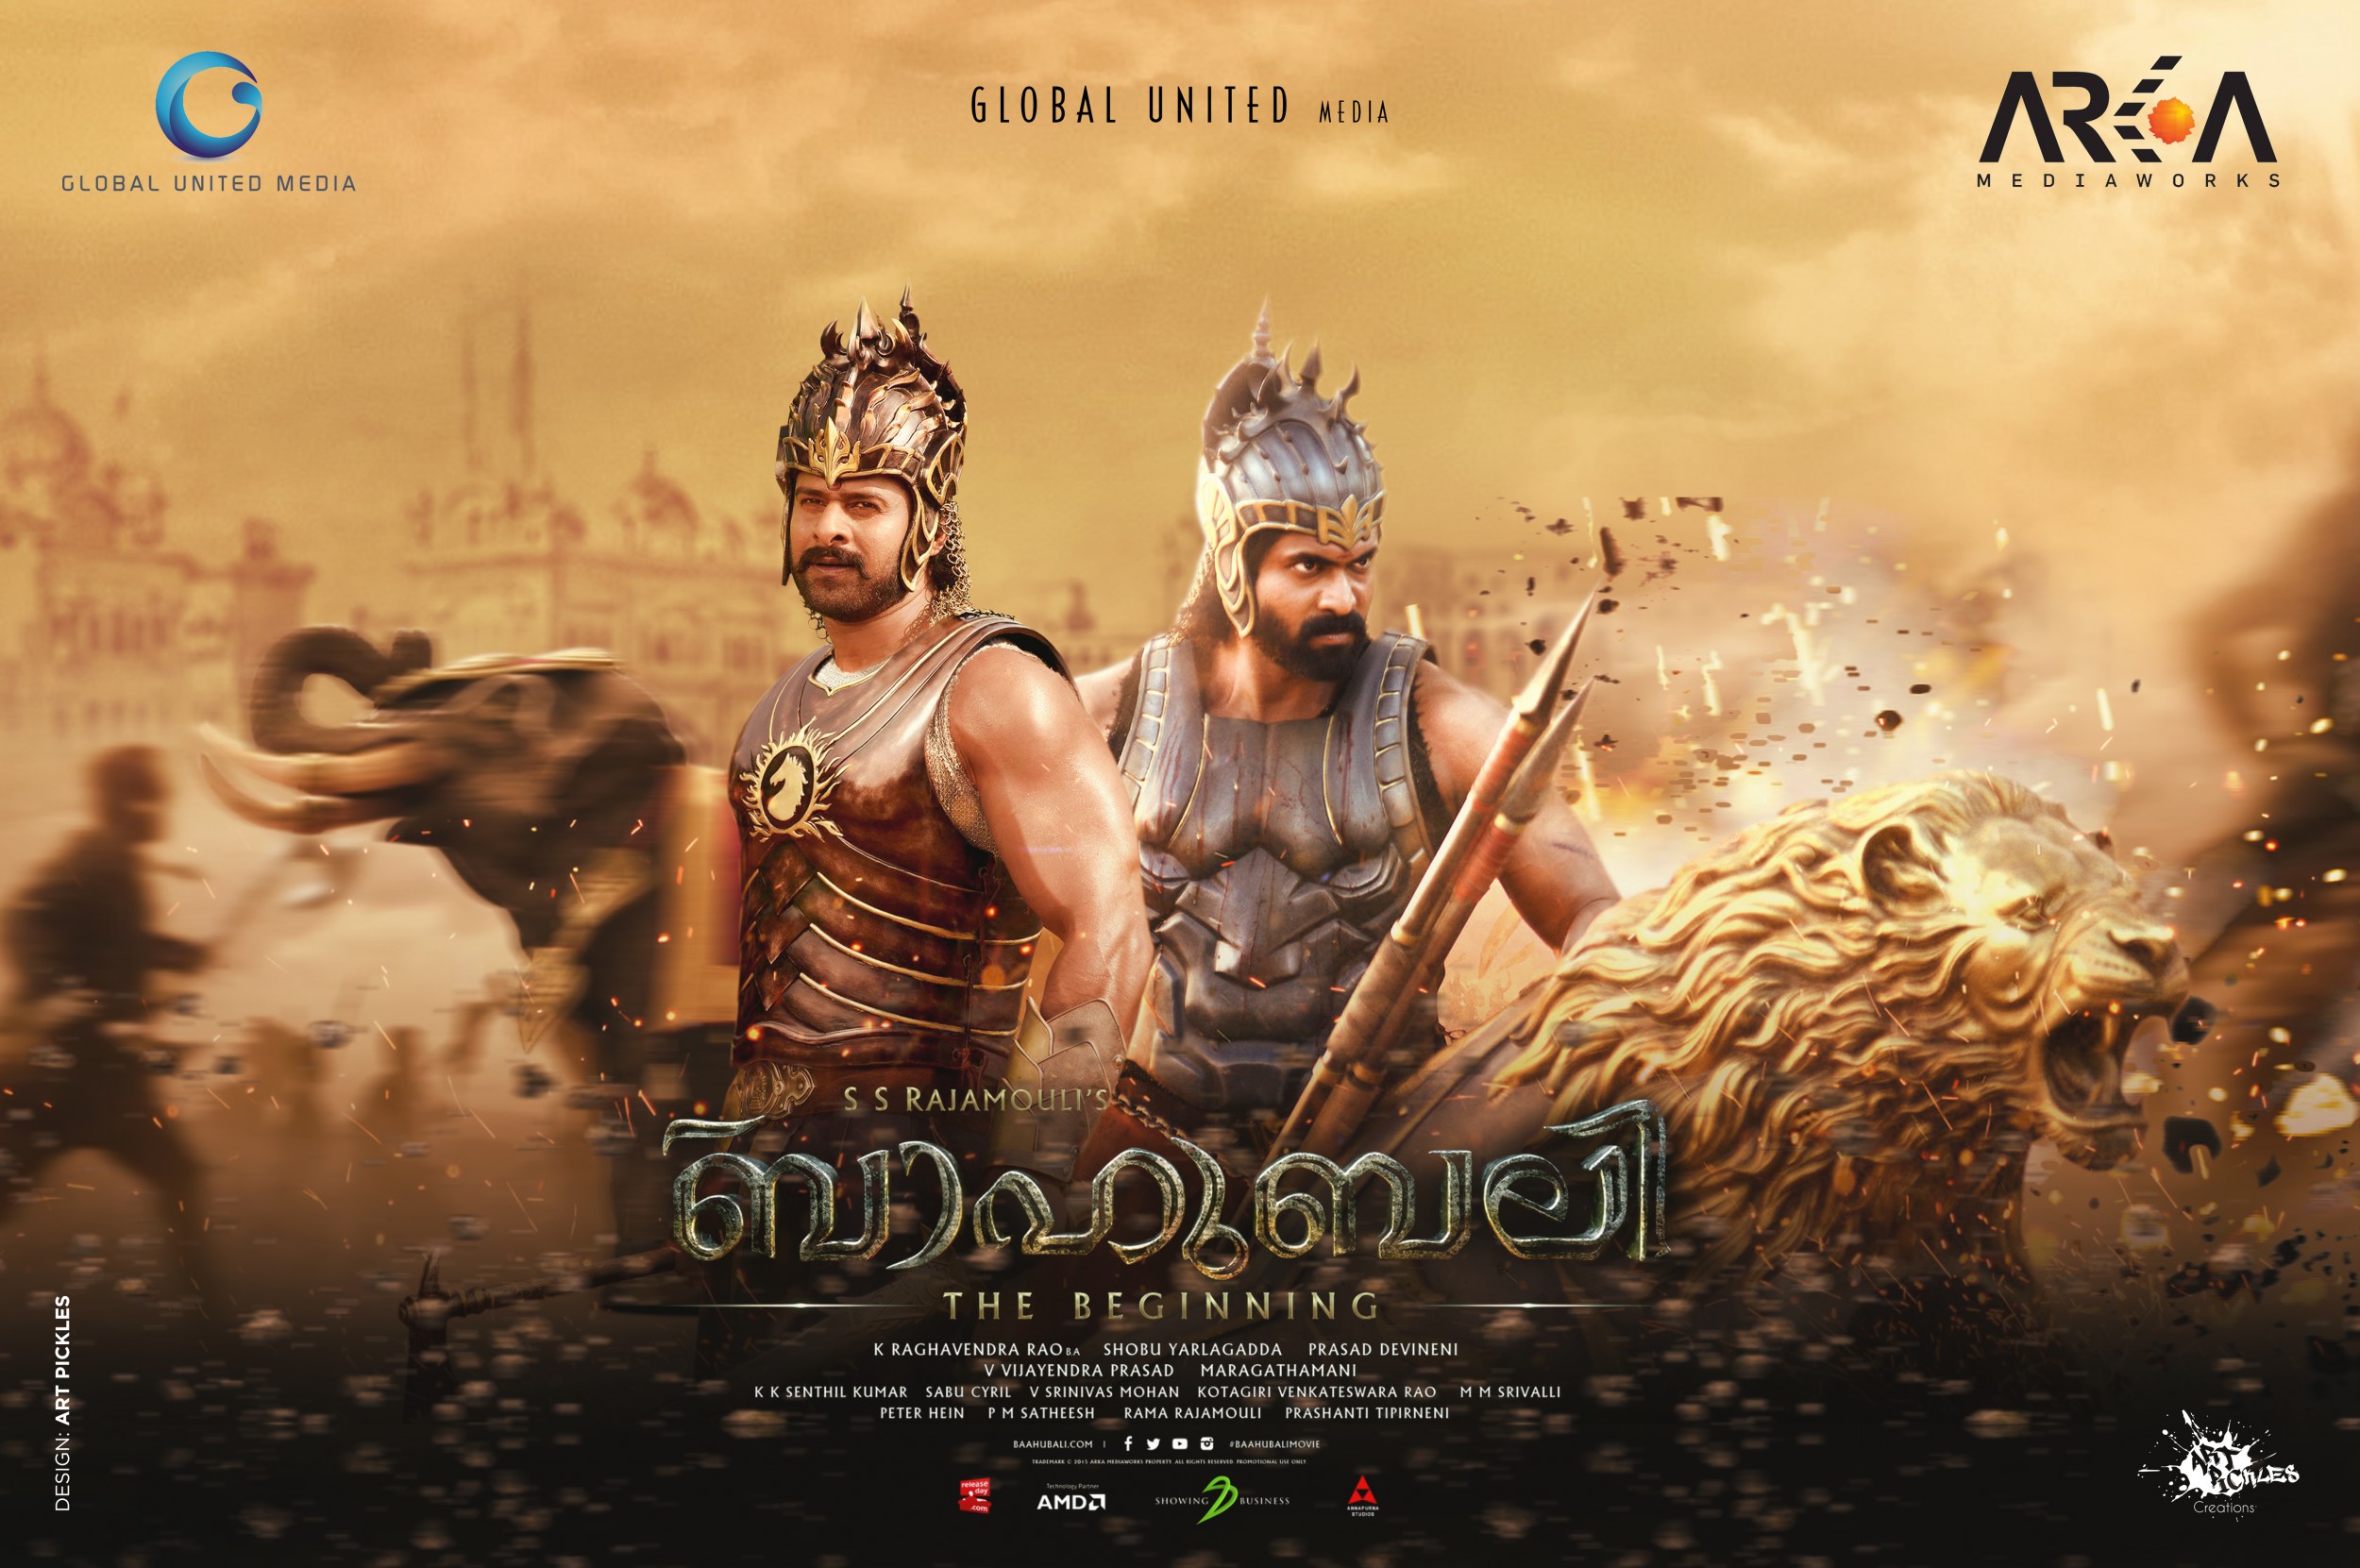 Mega Sized Movie Poster Image for Baahubali 